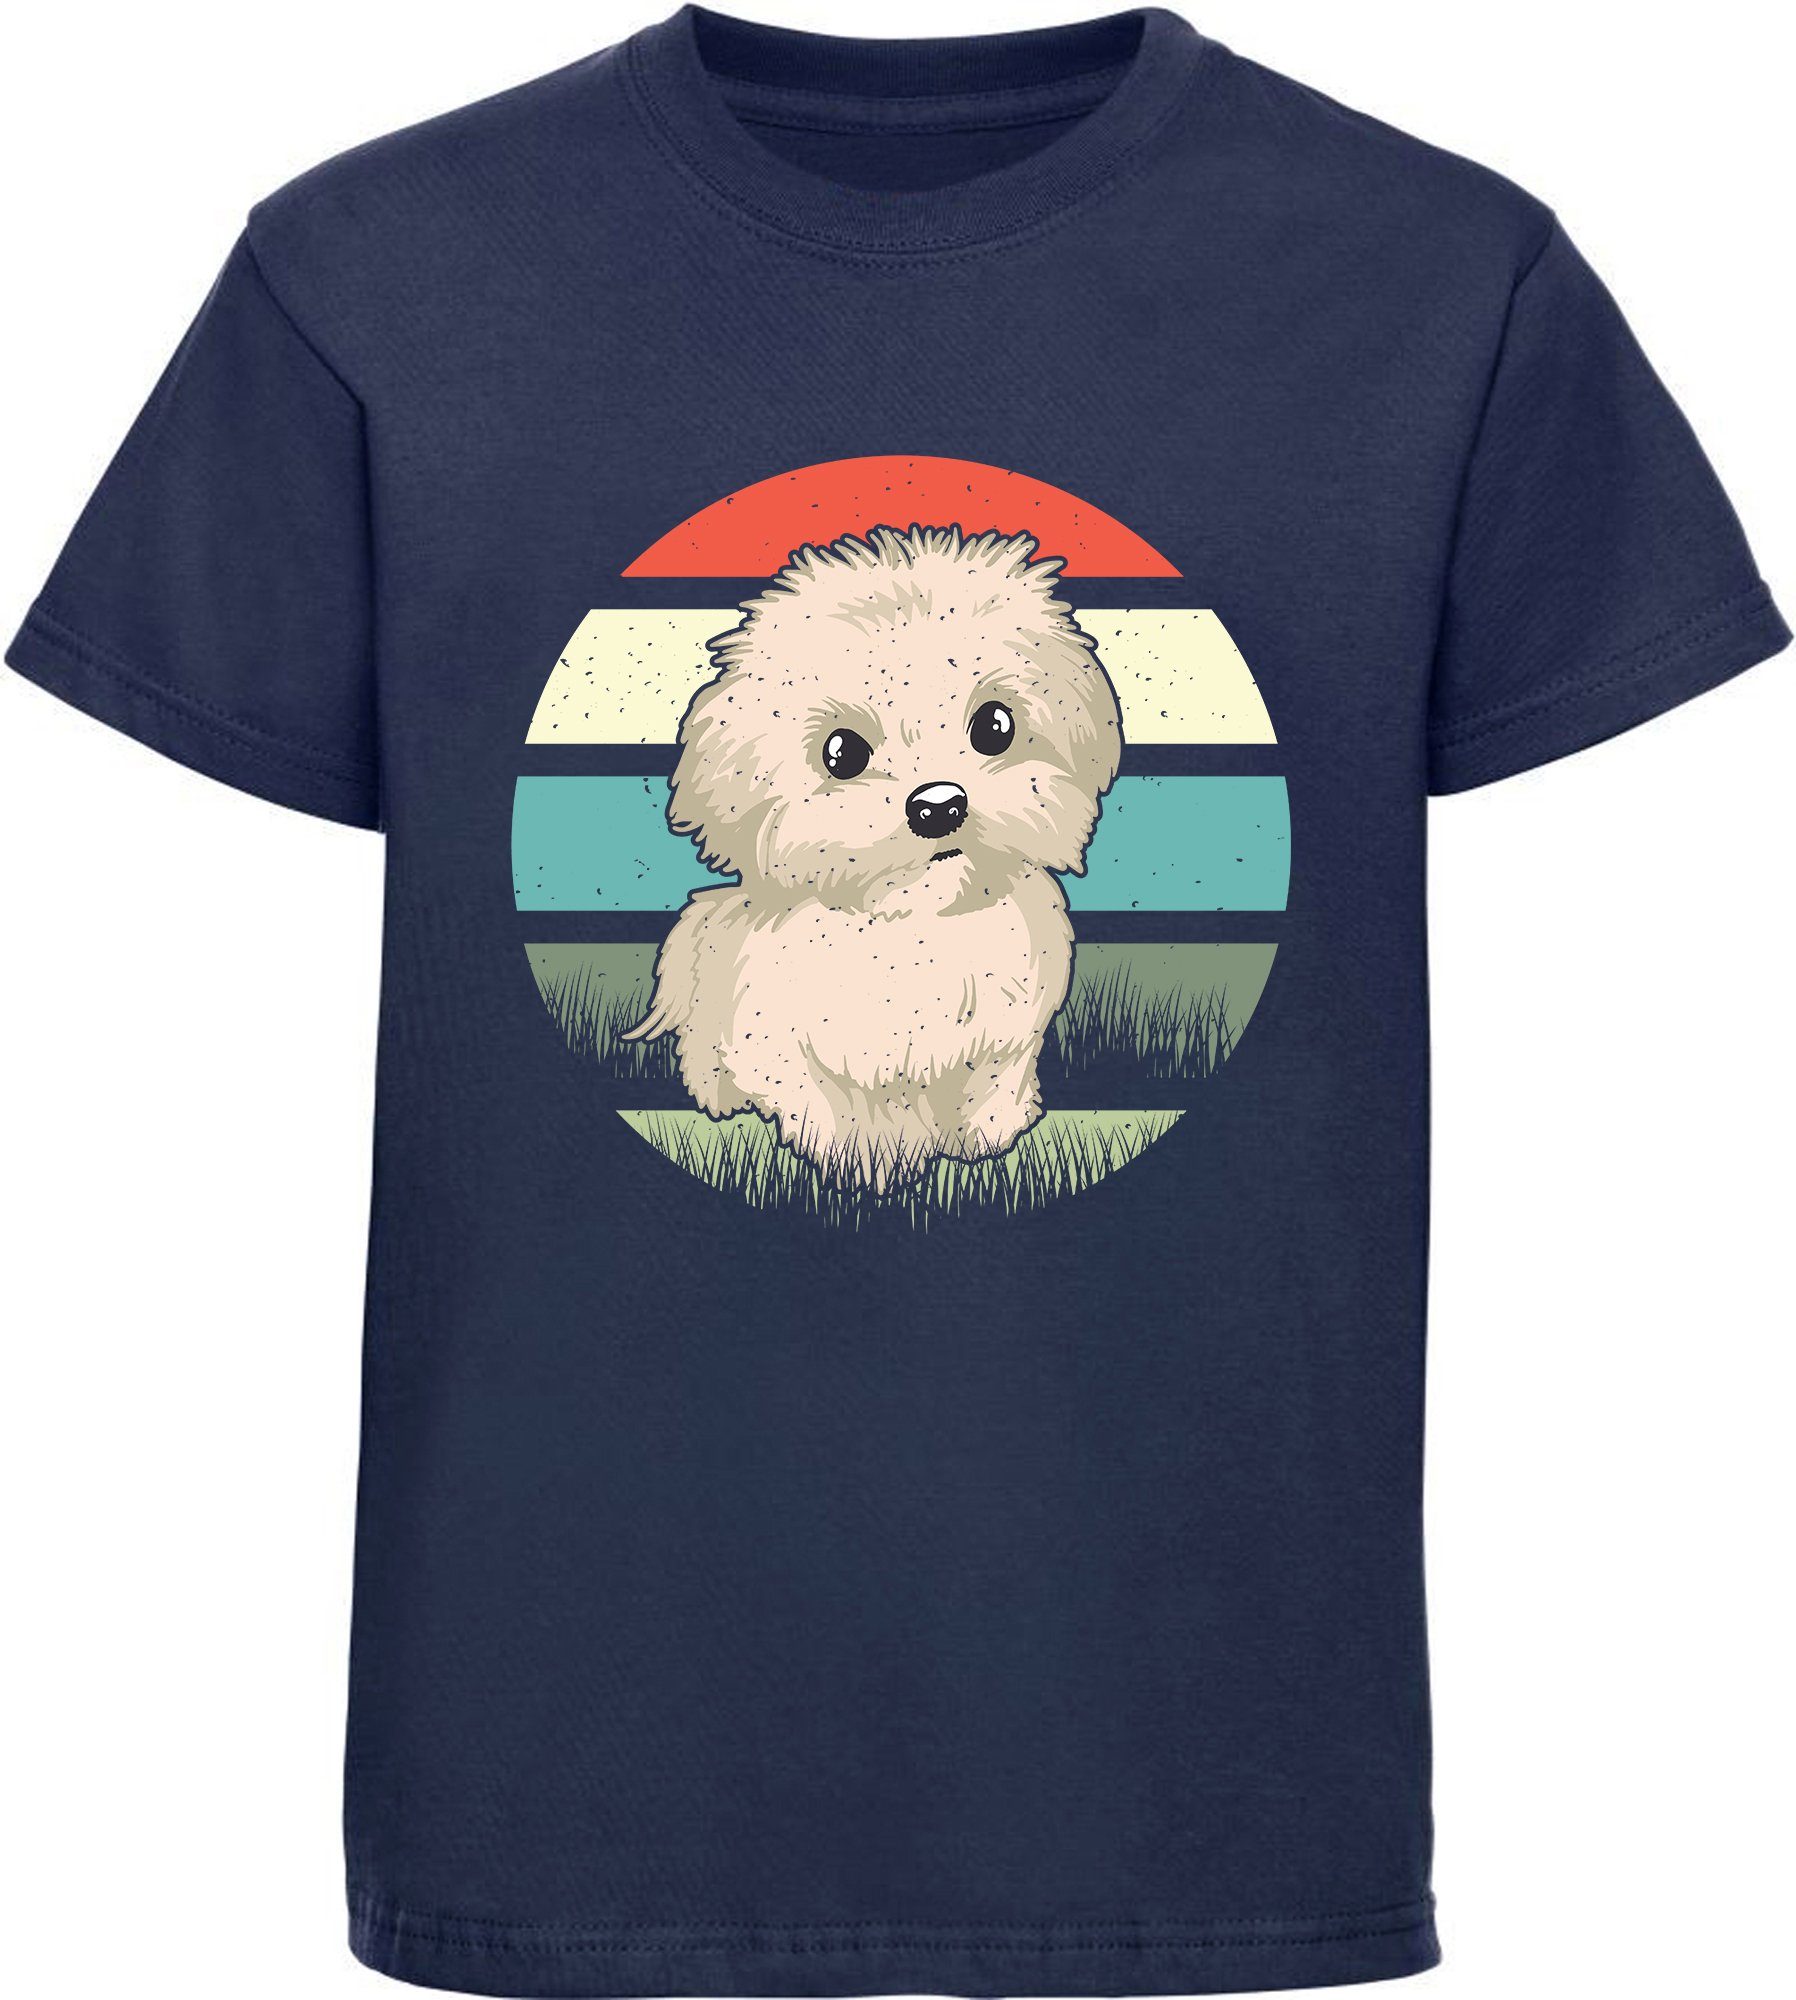 MyDesign24 Print-Shirt Kinder Hunde T-Shirt bedruckt - Retro Malteser Welpen Baumwollshirt mit Aufdruck, i242 navy blau